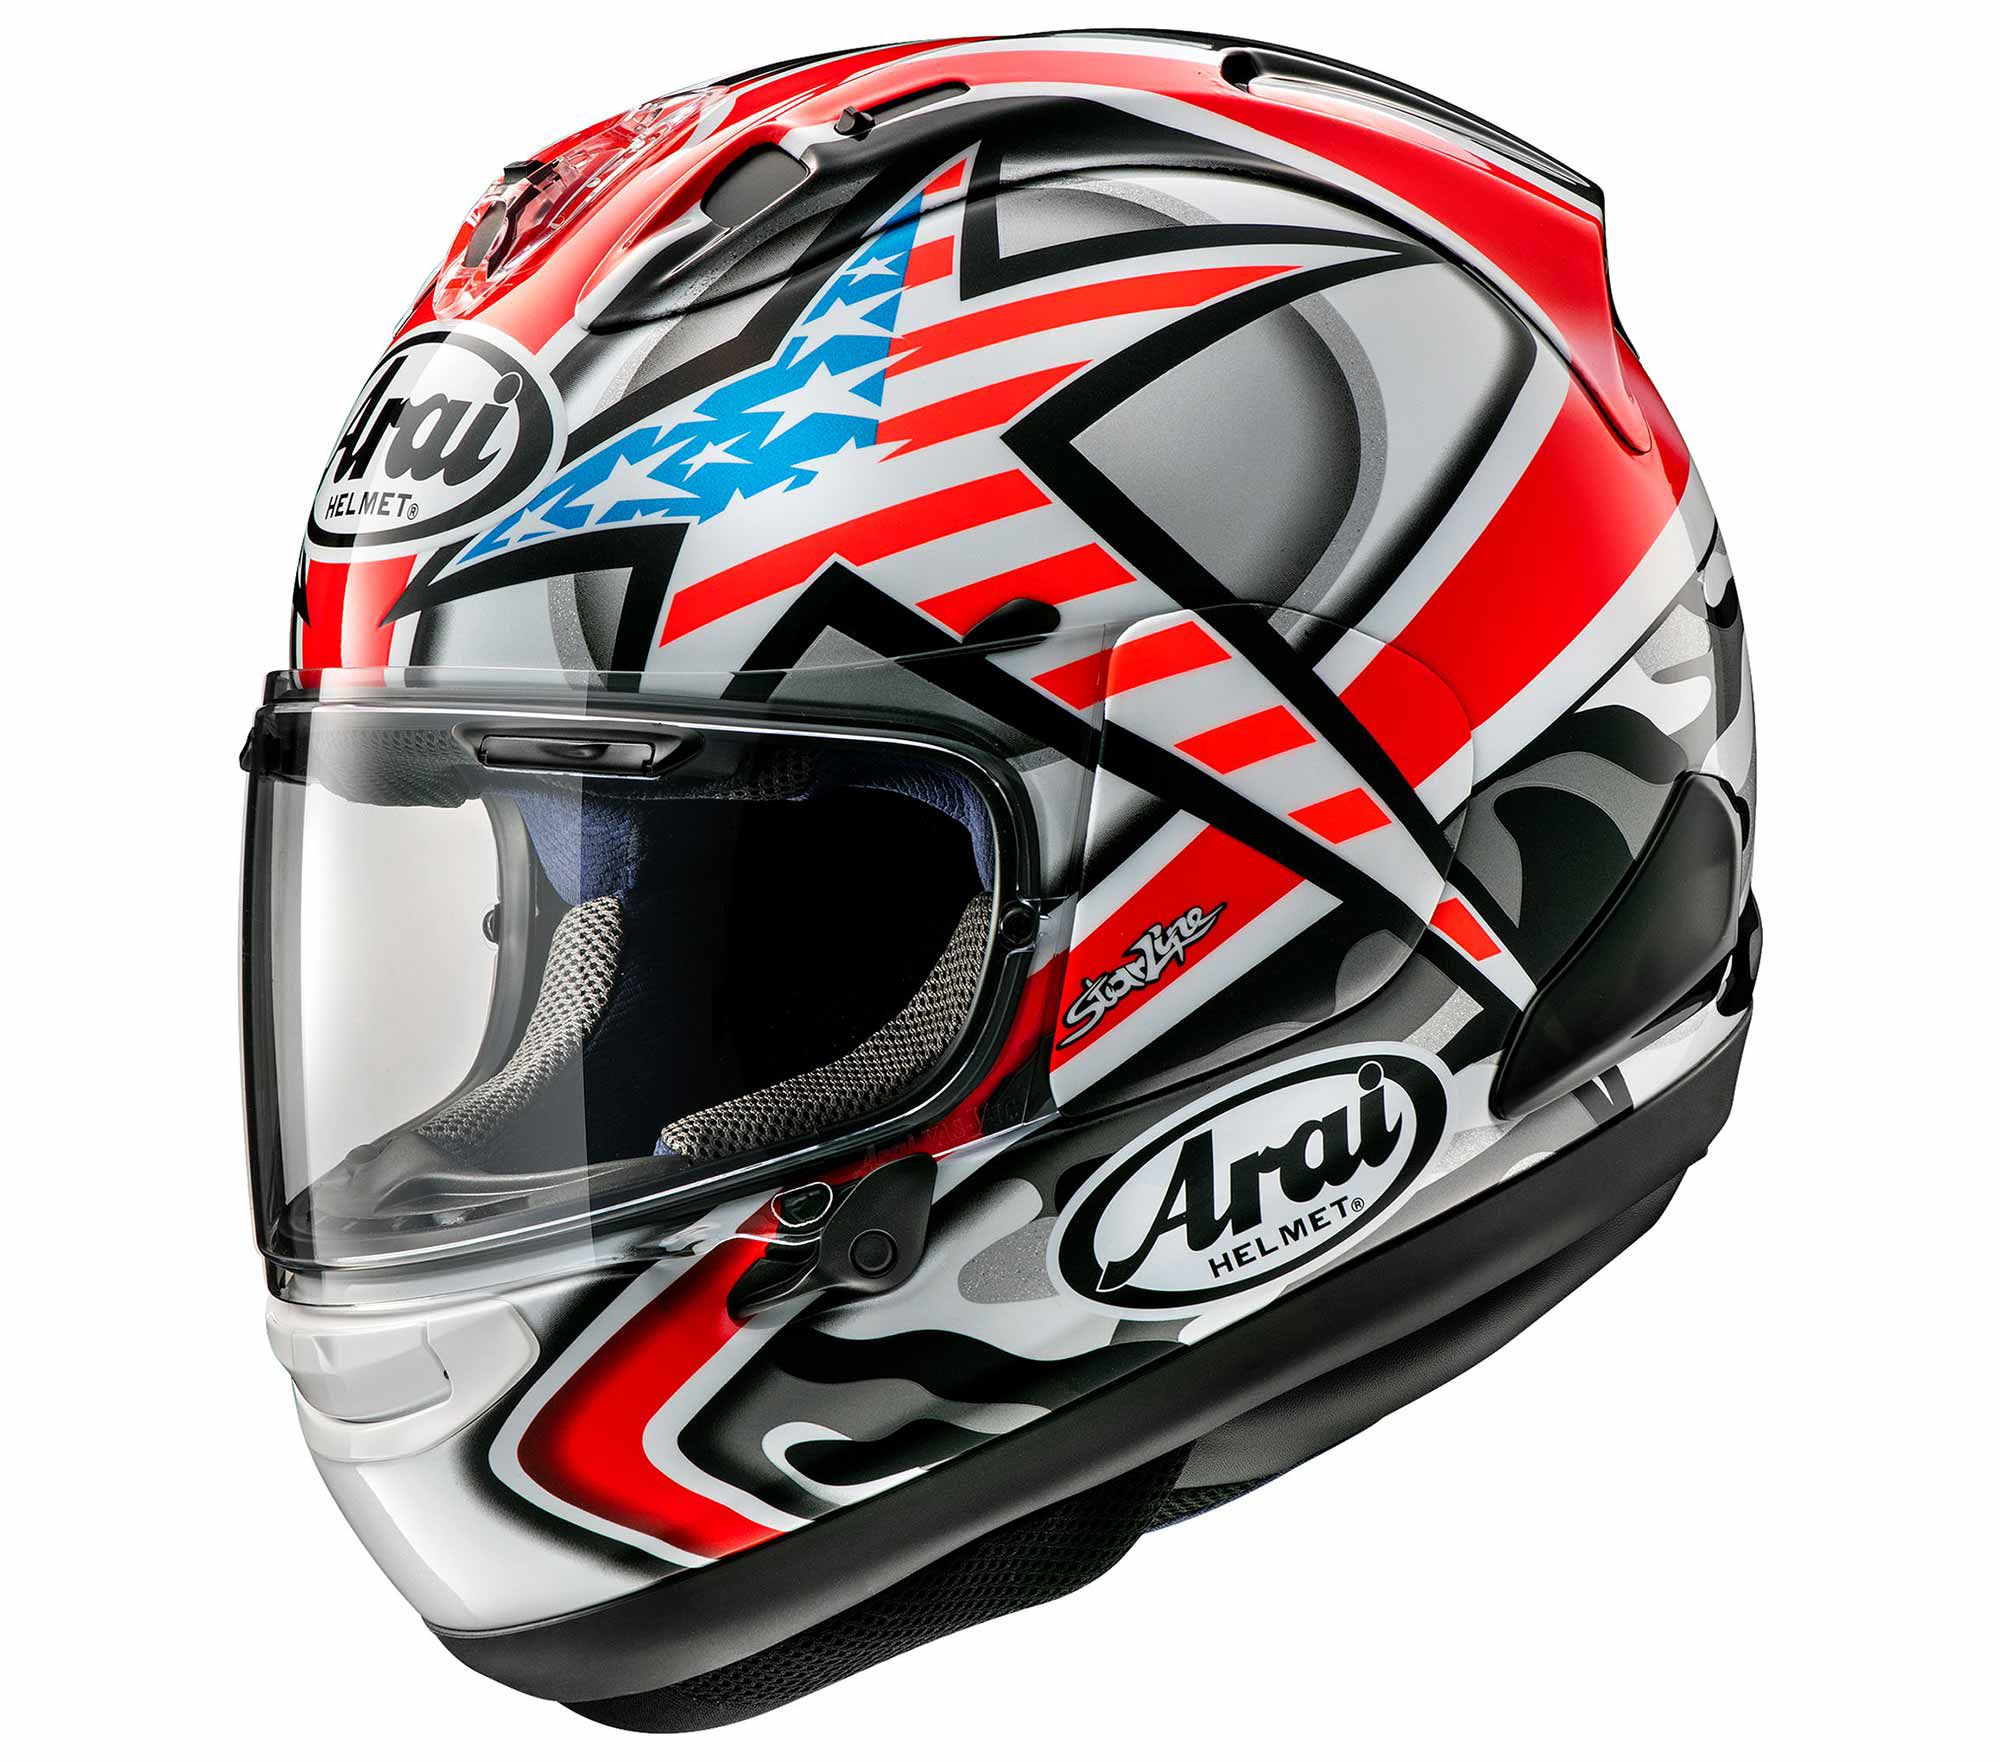 Celebrate the life and racing accomplishments of Nicky Hayden with the Arai Corsair-X Hayden Laguna helmet.